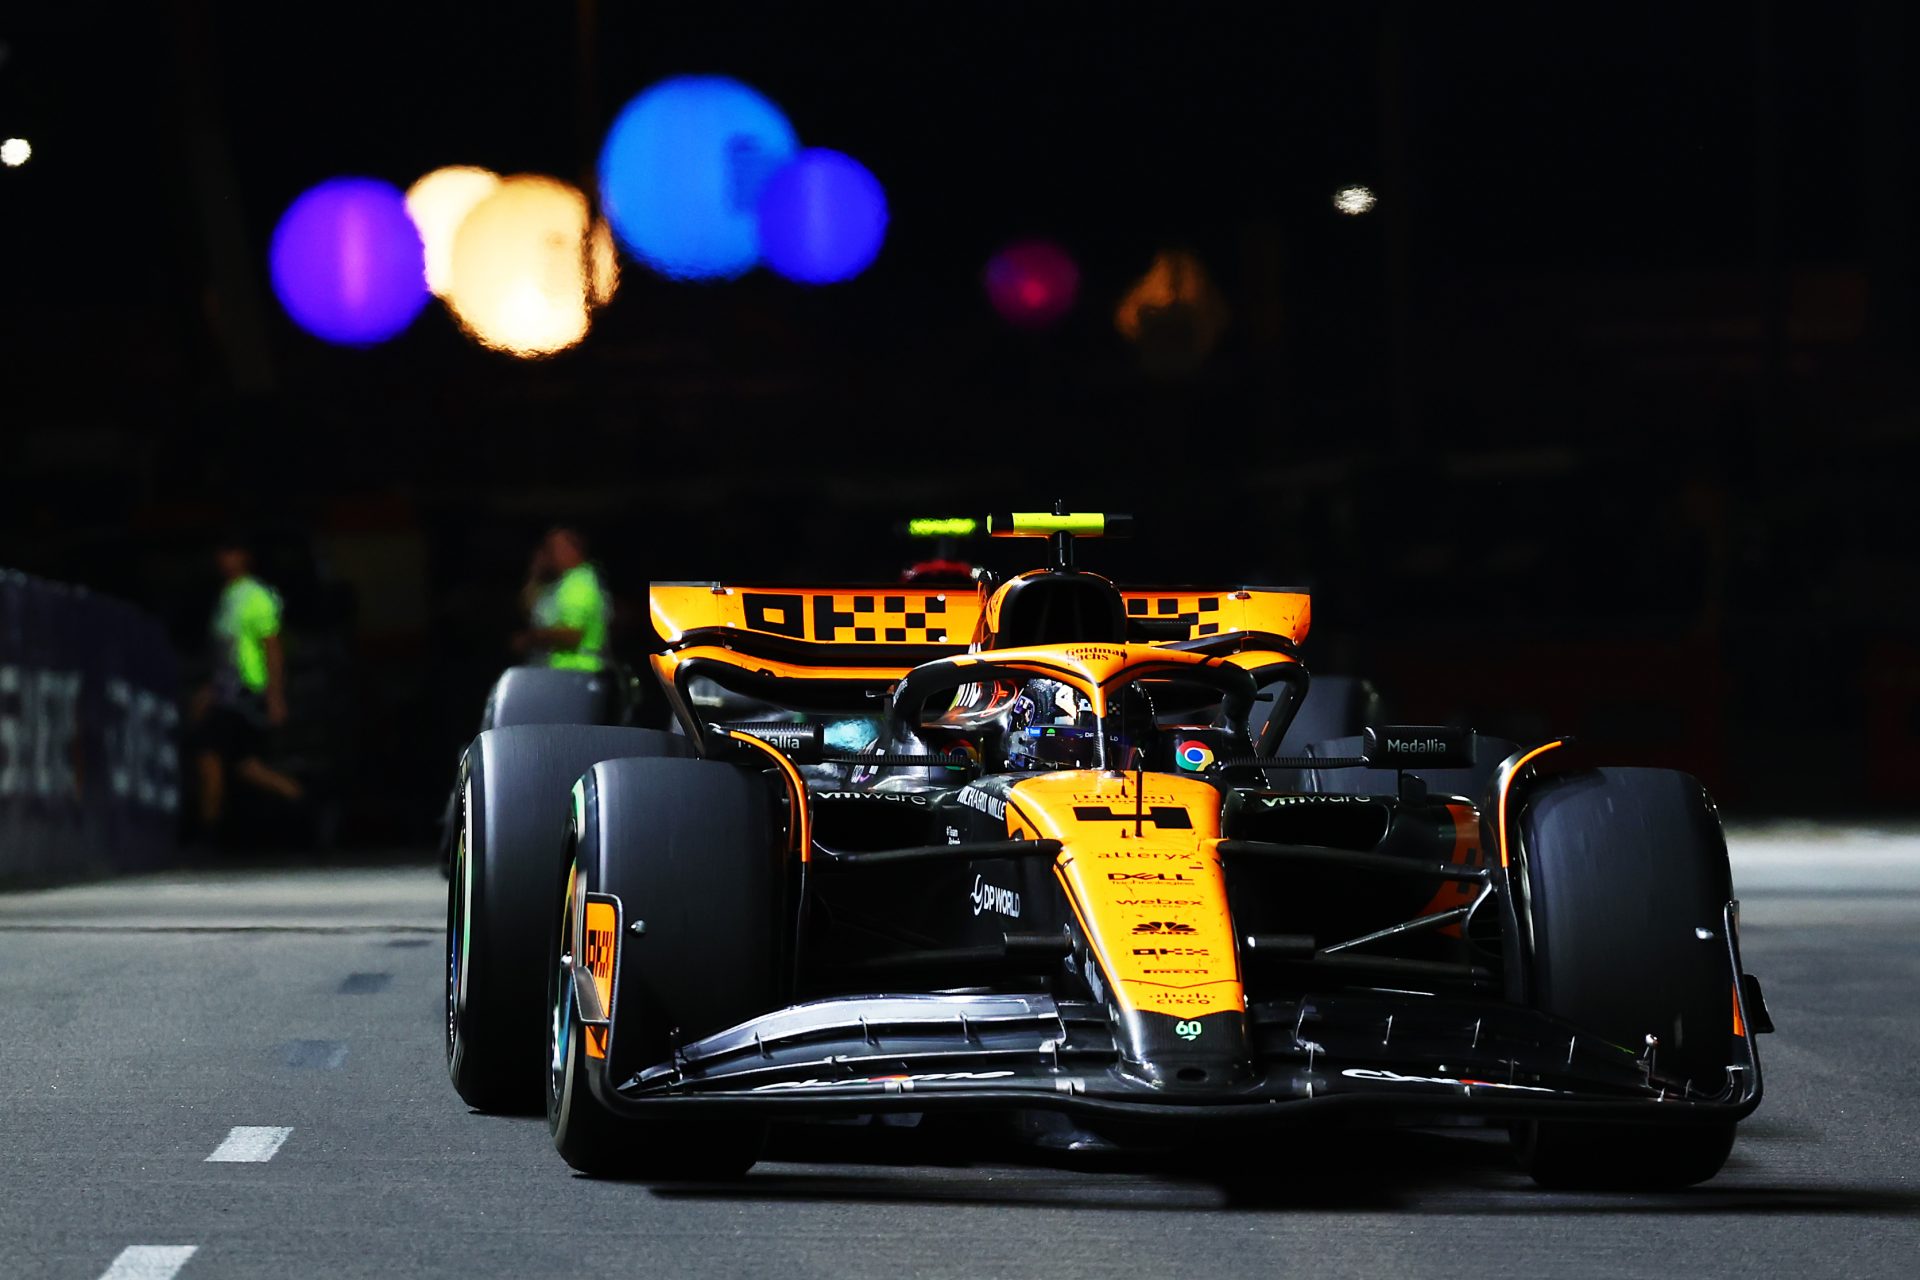 Can McLaren continue their form?